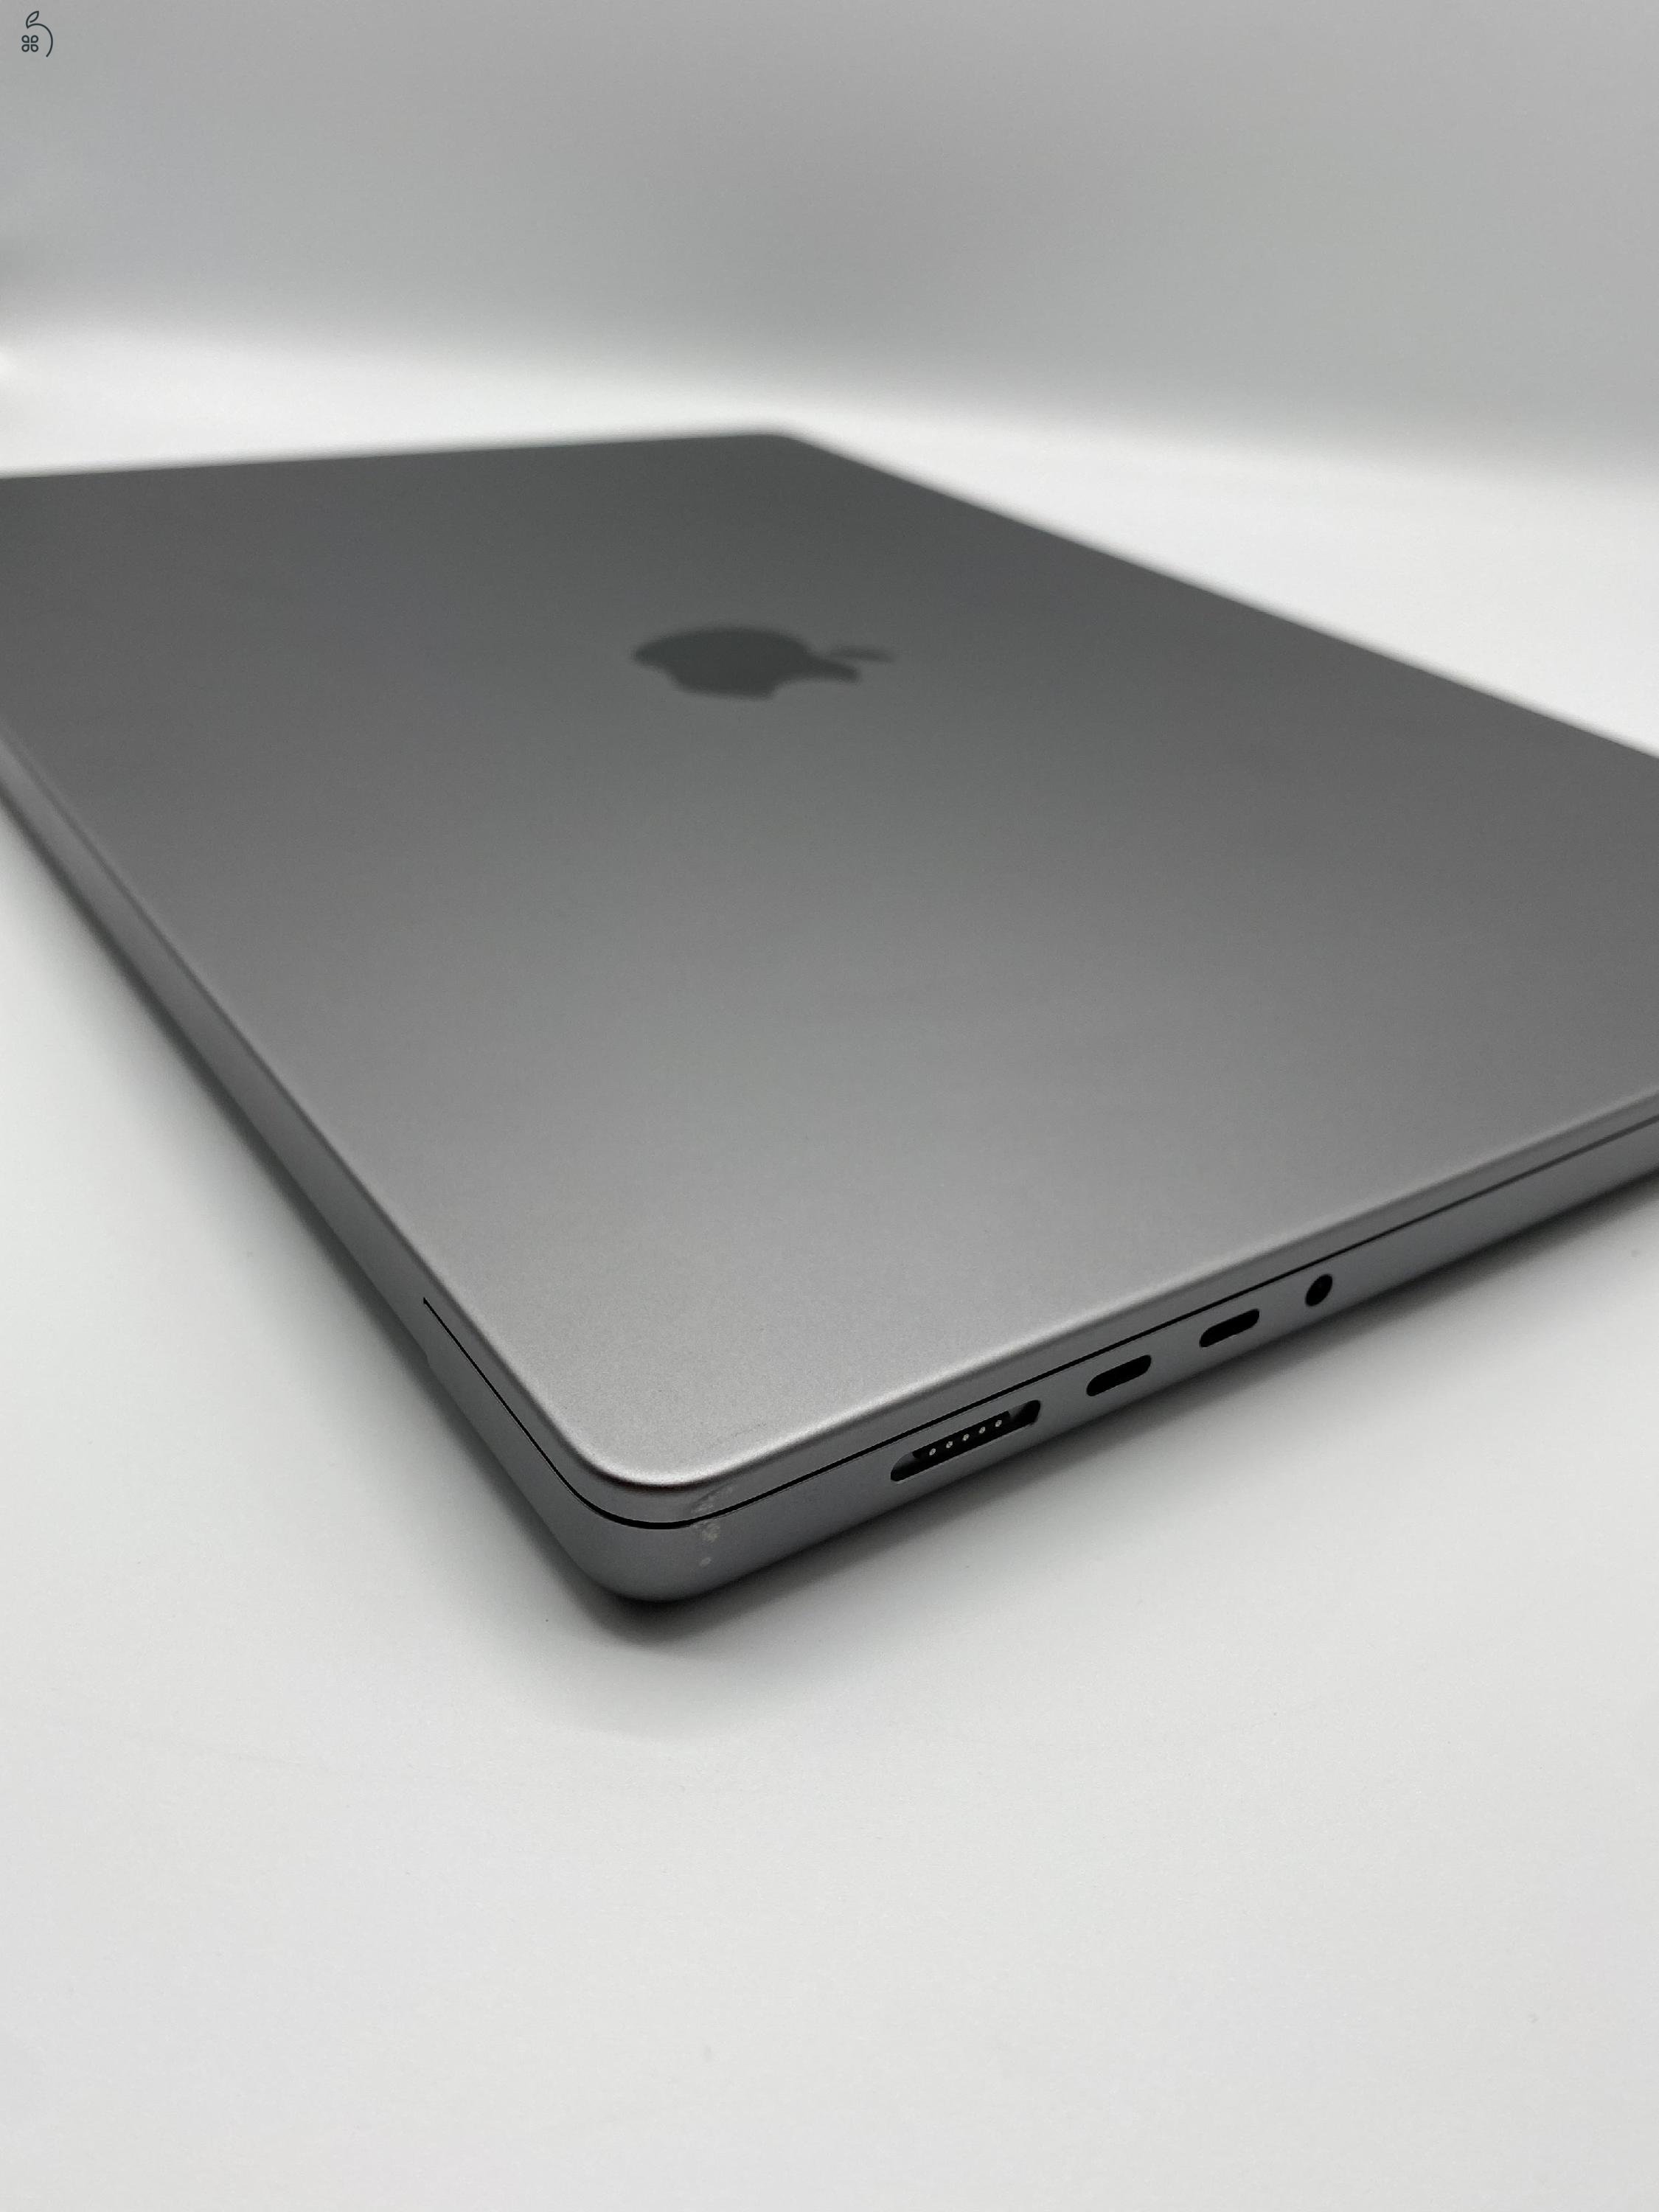 MacBook pro 16 inch 16gb ram 512ssd Áfás 